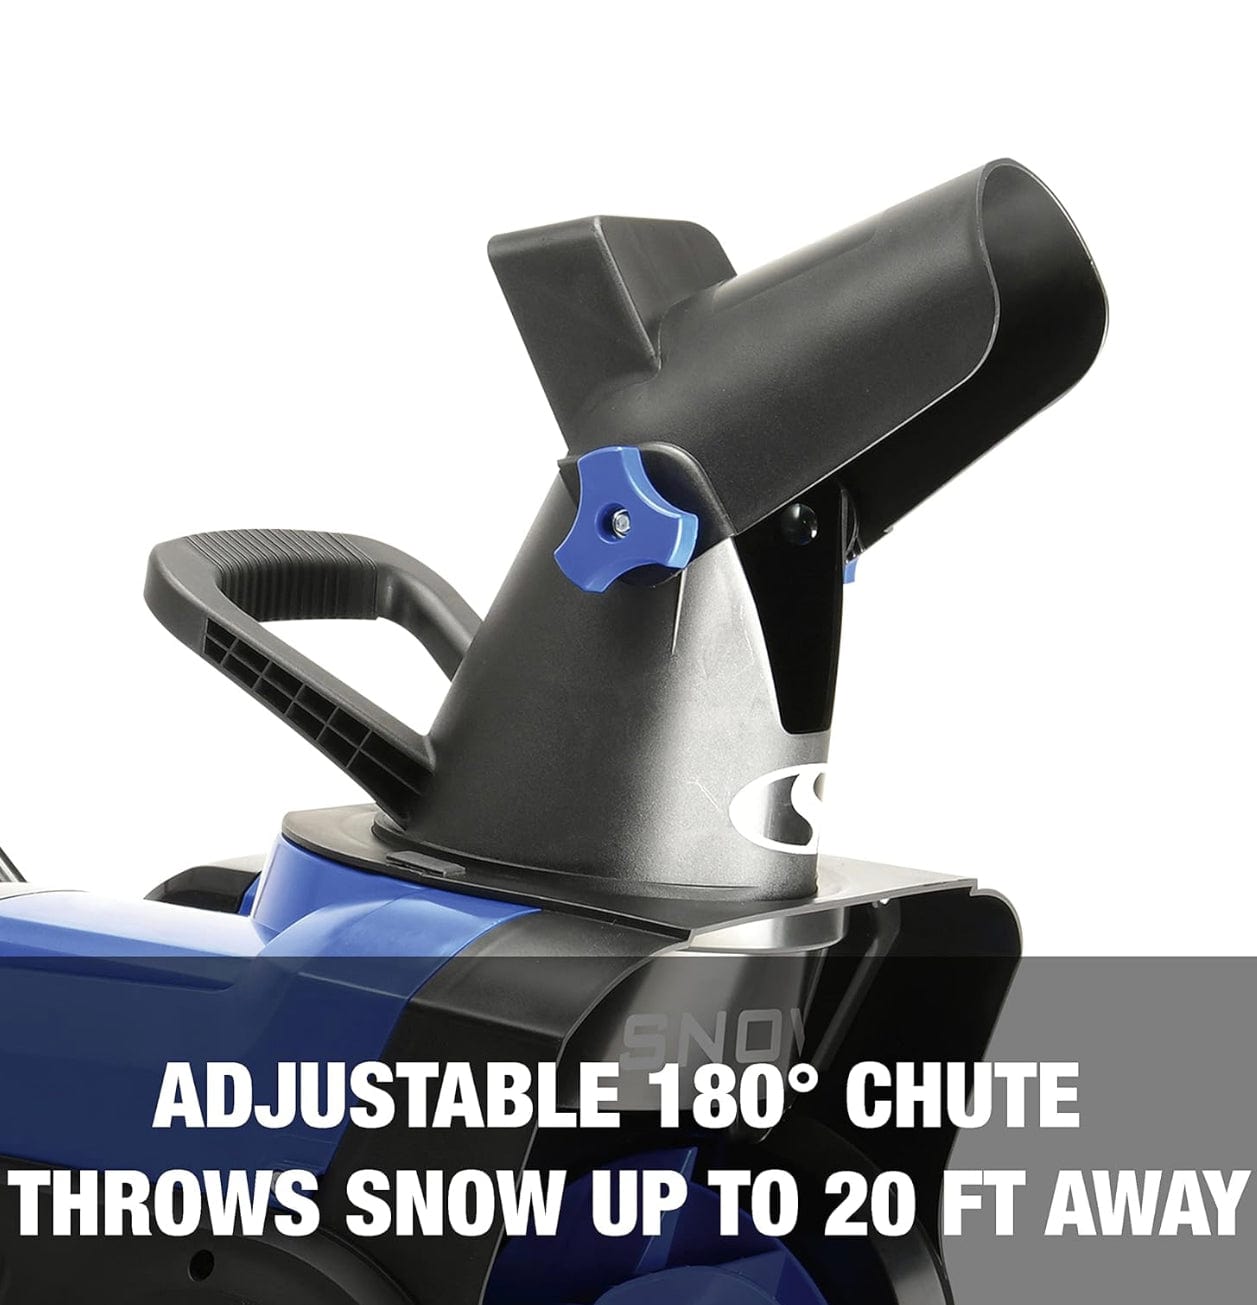 Snow Joe 24V-X2-20SB 20-Inch 48 Cordless Snow Blower, Kit (w/2 x 24-Volt 4.0-Ah Batteries and Charger)